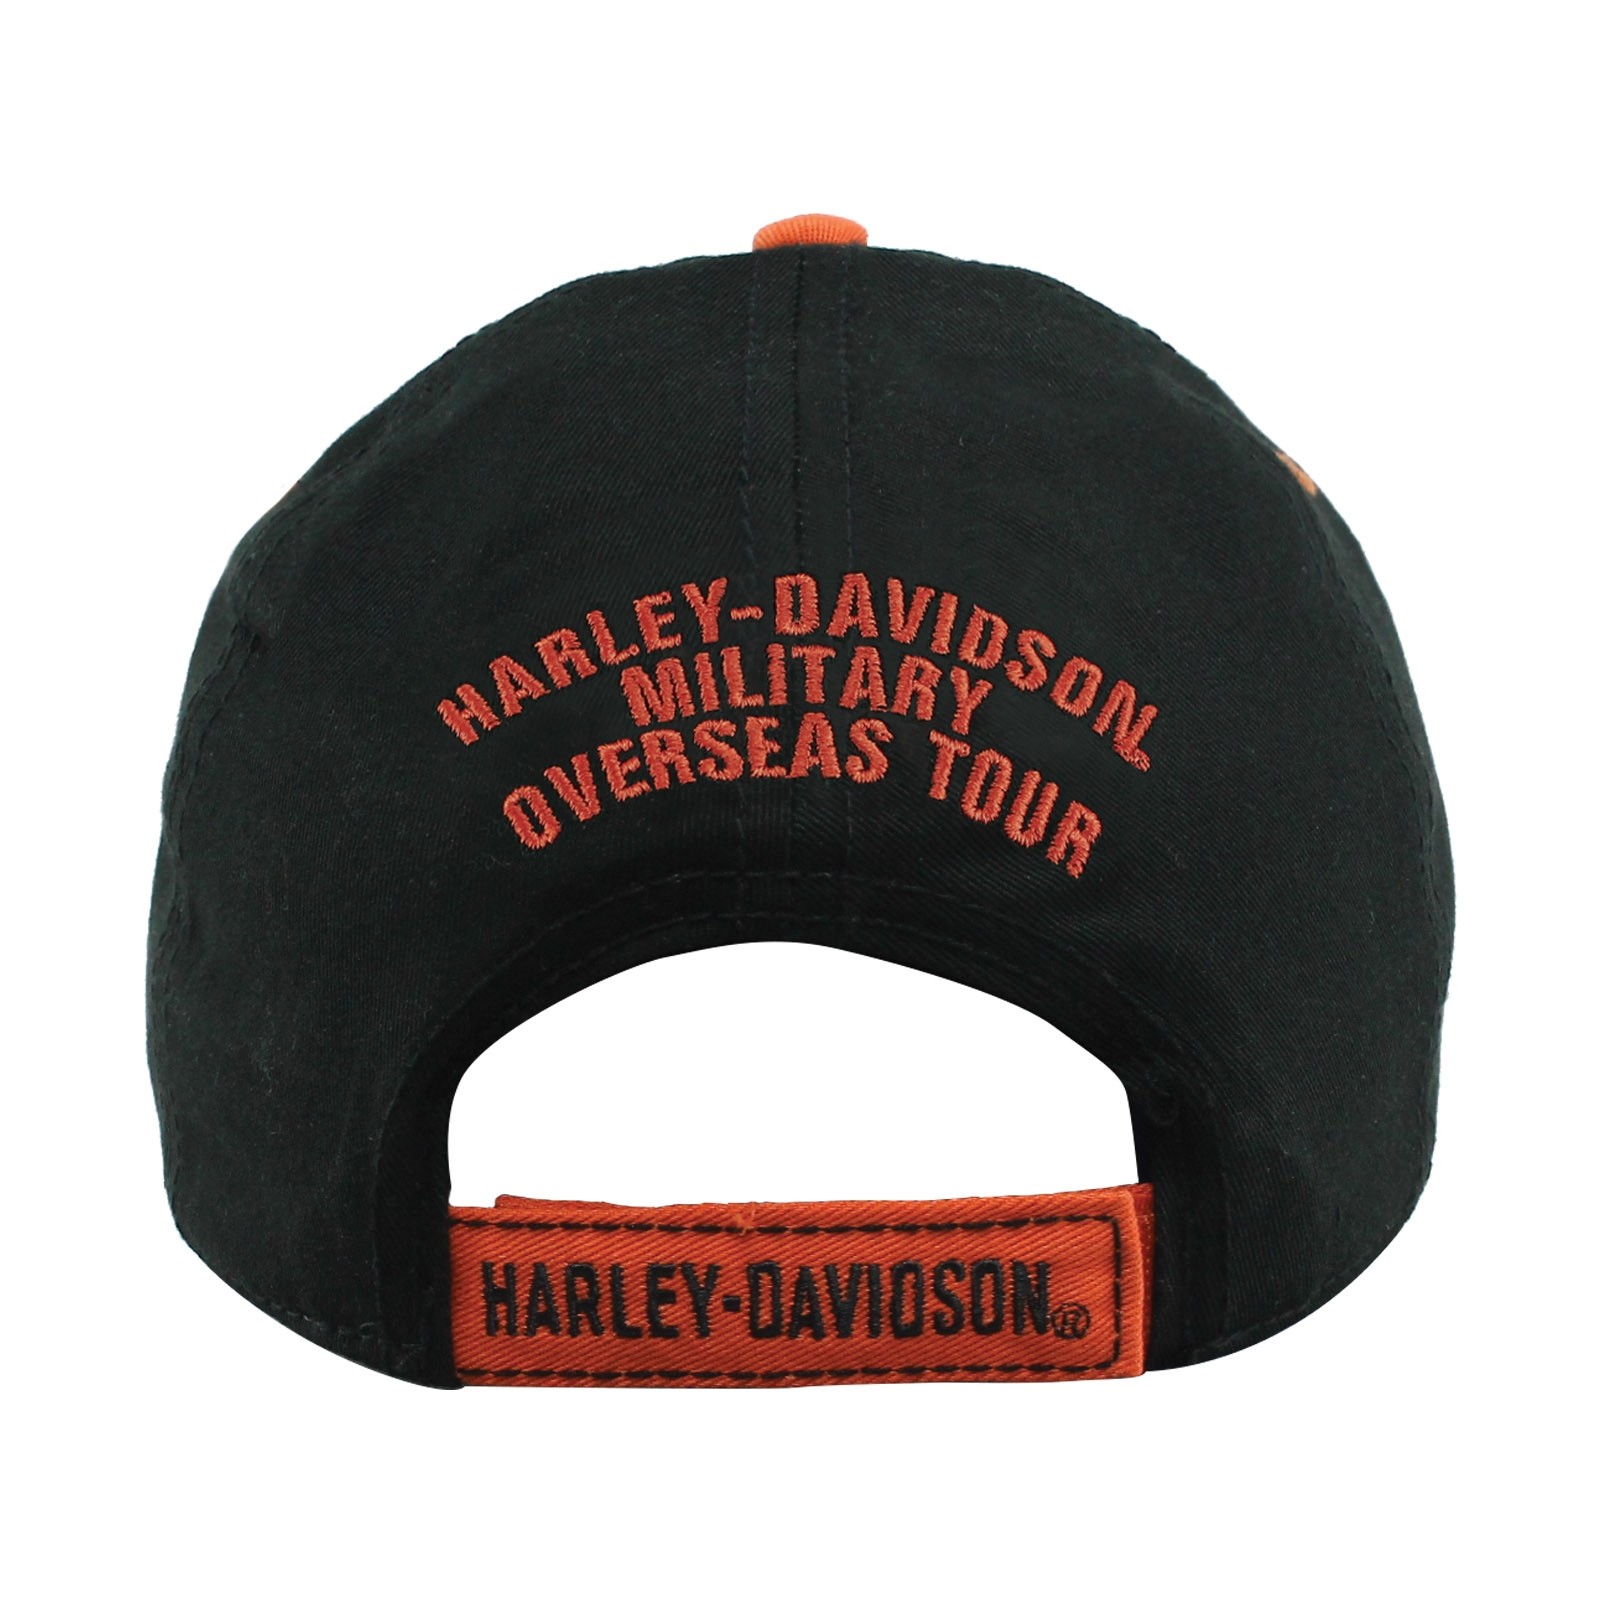 Mens Black//Orange//Gray Ballcap Harley-Davidson Military Overseas Tour Restored